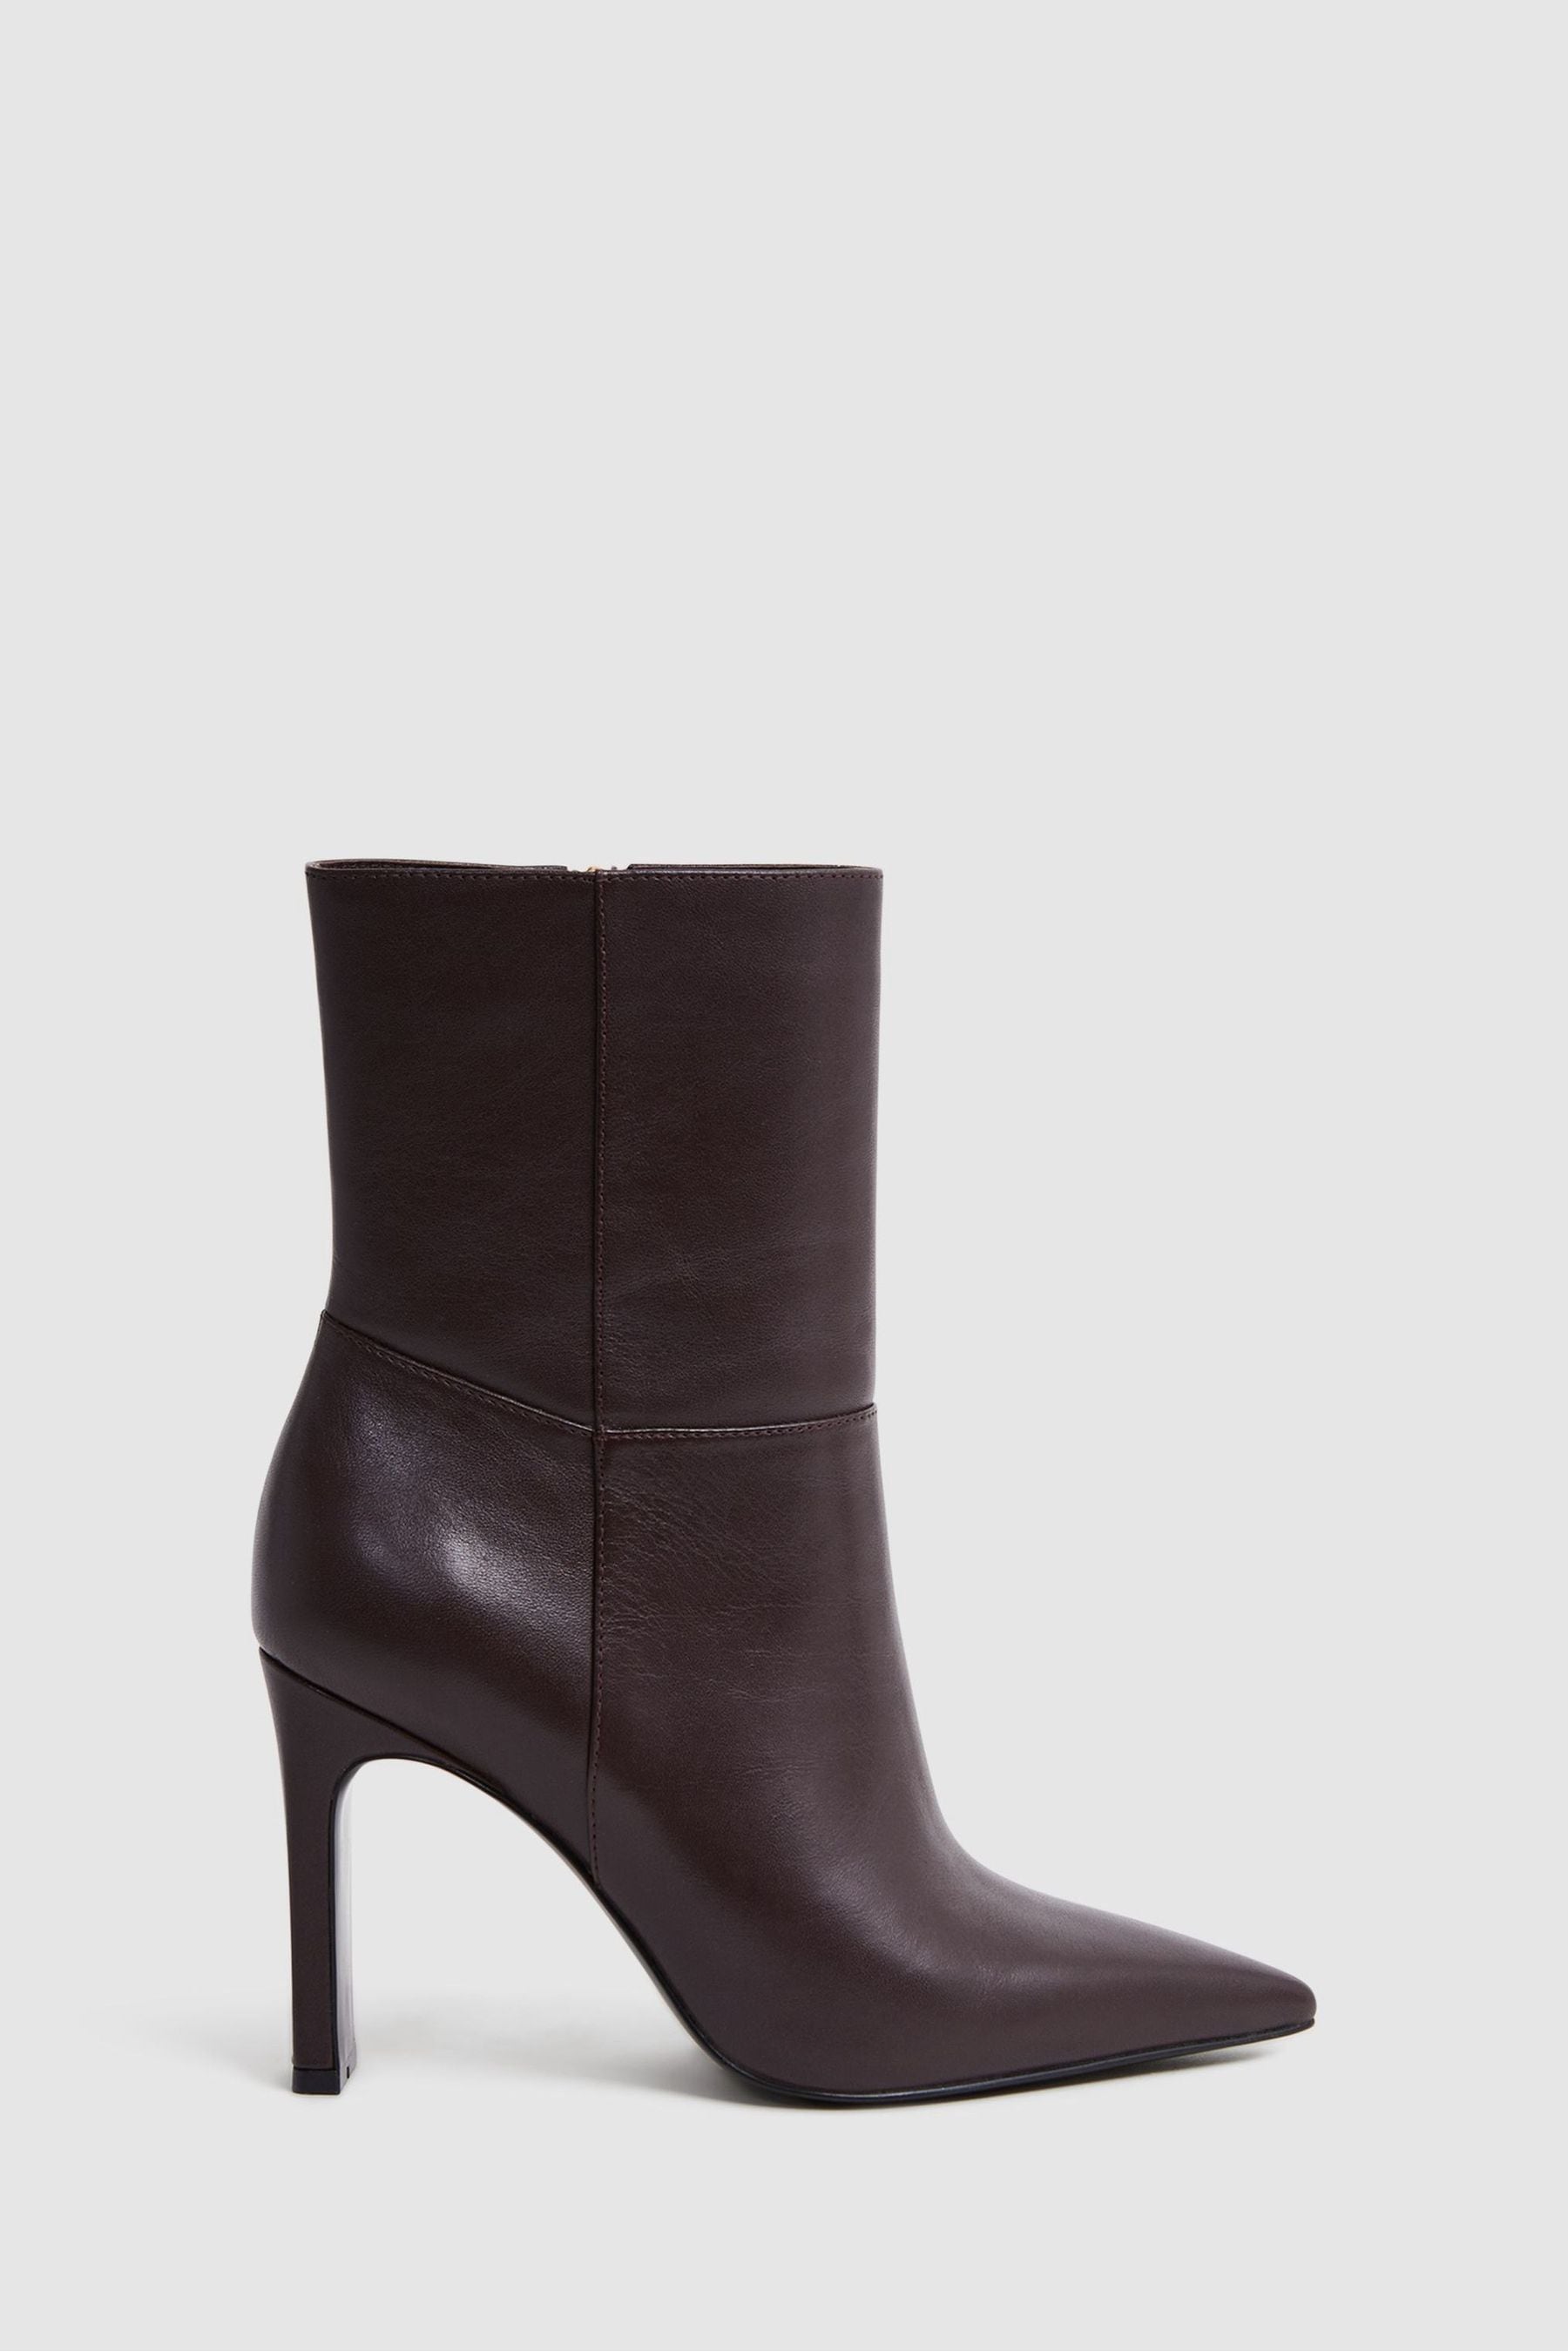 Reiss Vanessa - Burgundy Leather Heeled Ankle Boots, Uk 7 Eu 40